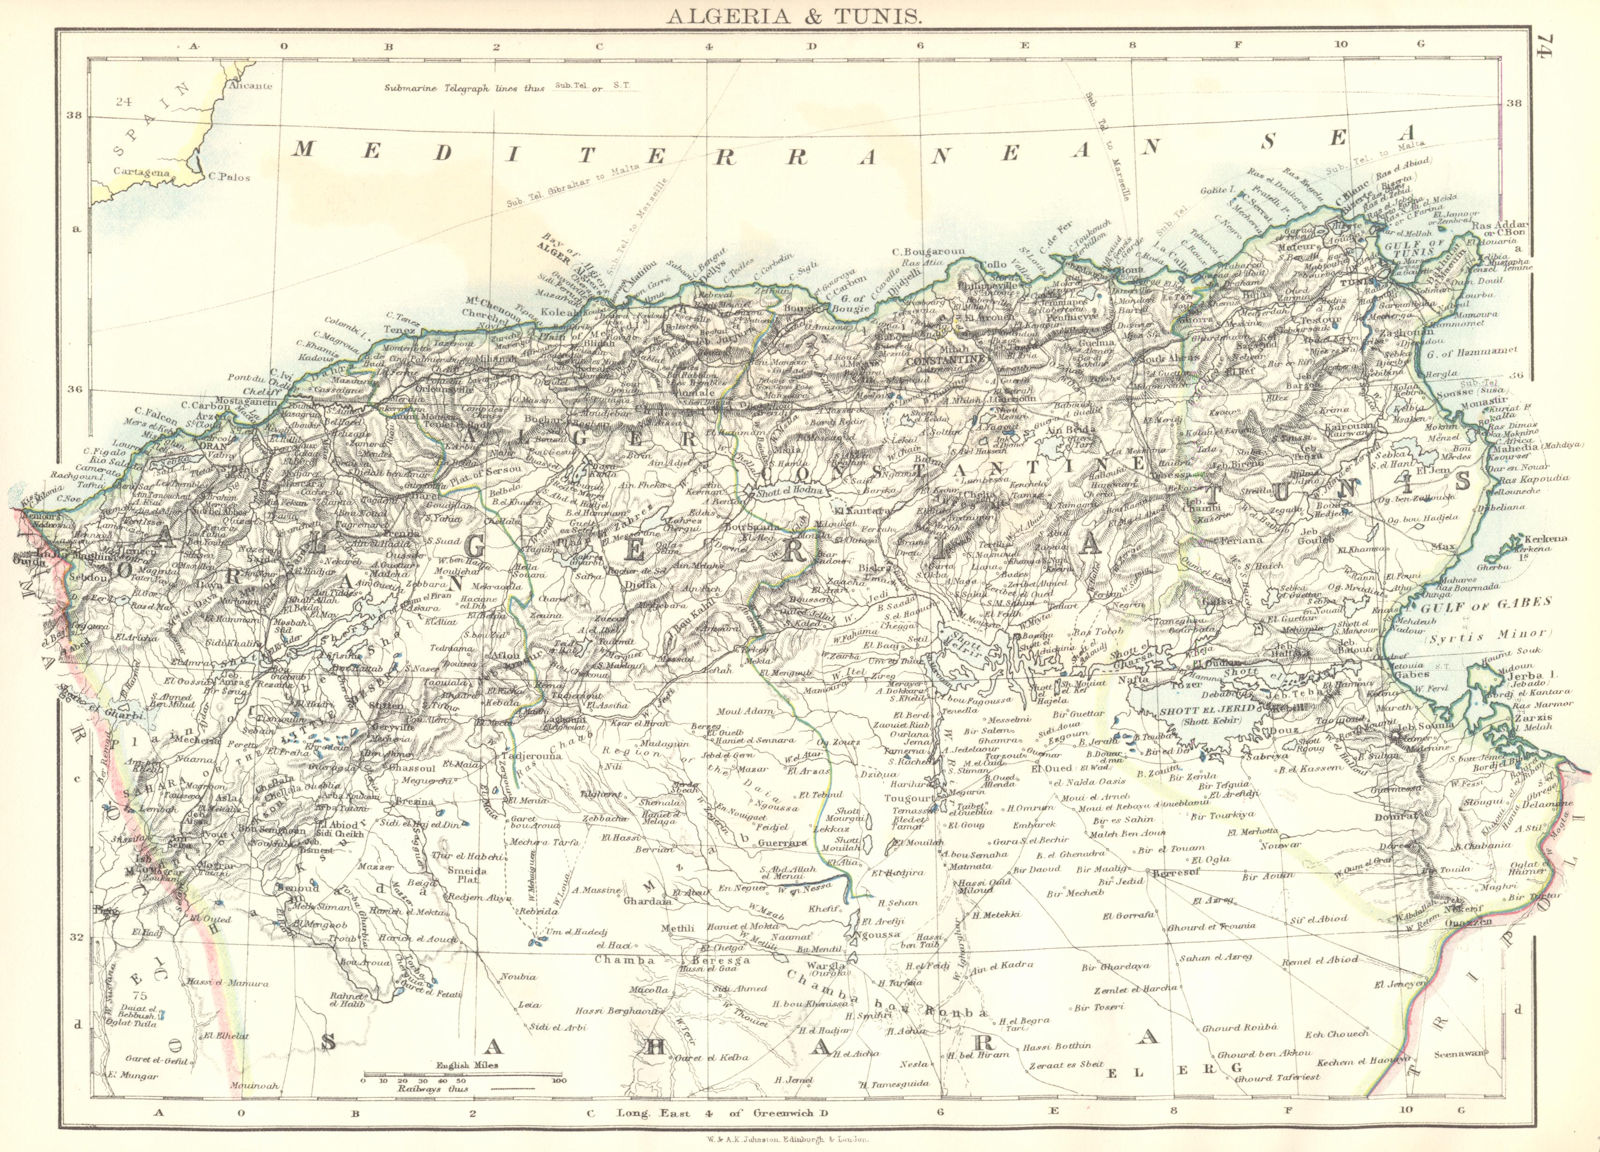 ALGERIA & TUNIS. Maghreb Tunisia. Provinces. Telegraph cables.JOHNSTON 1899 map